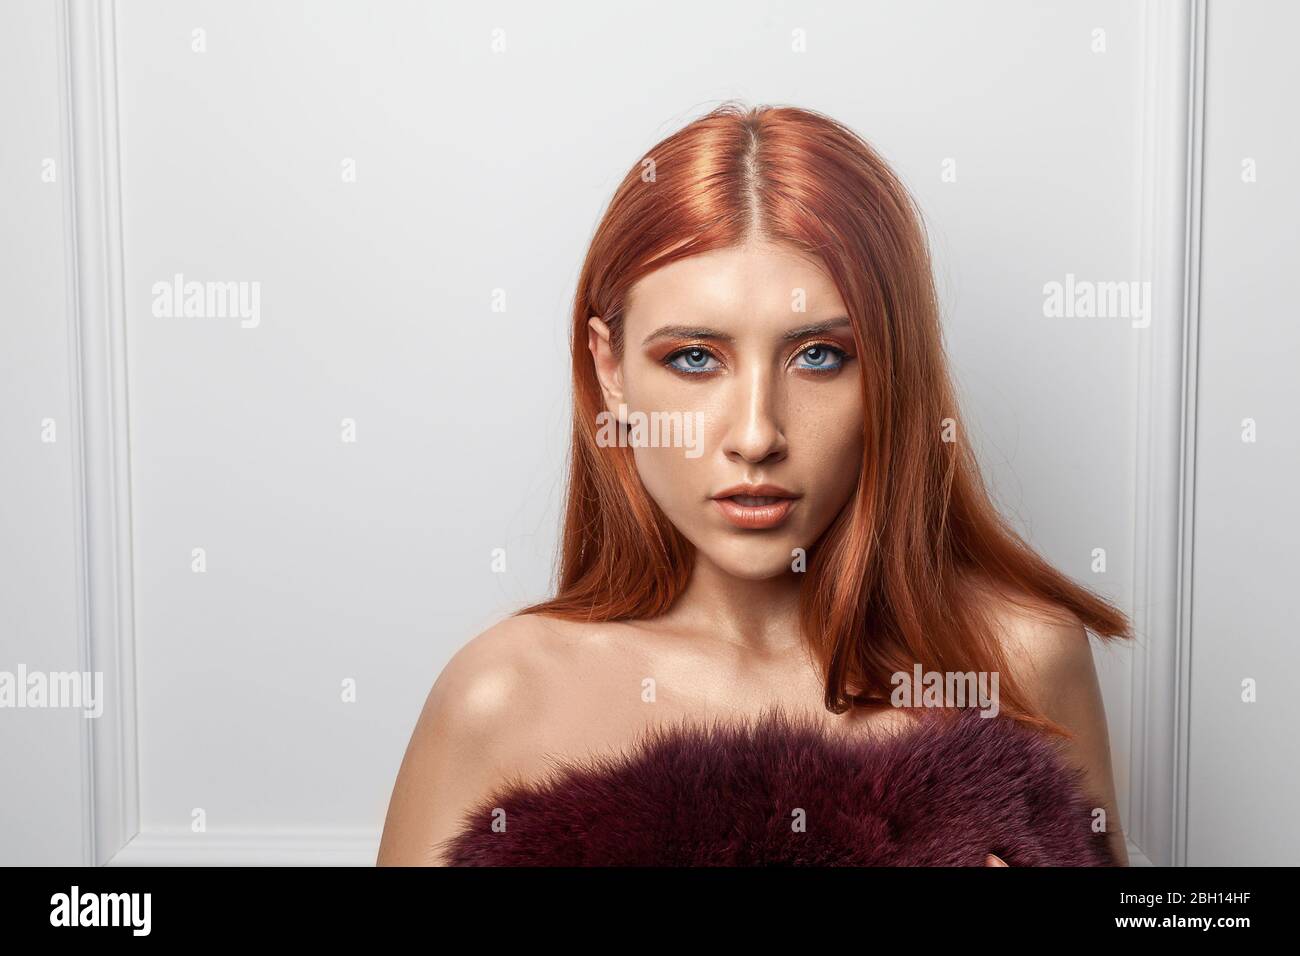 Beautiful fashionable ginger woman. Portrait of a fashion model with orange eye makeup. Stock Photo